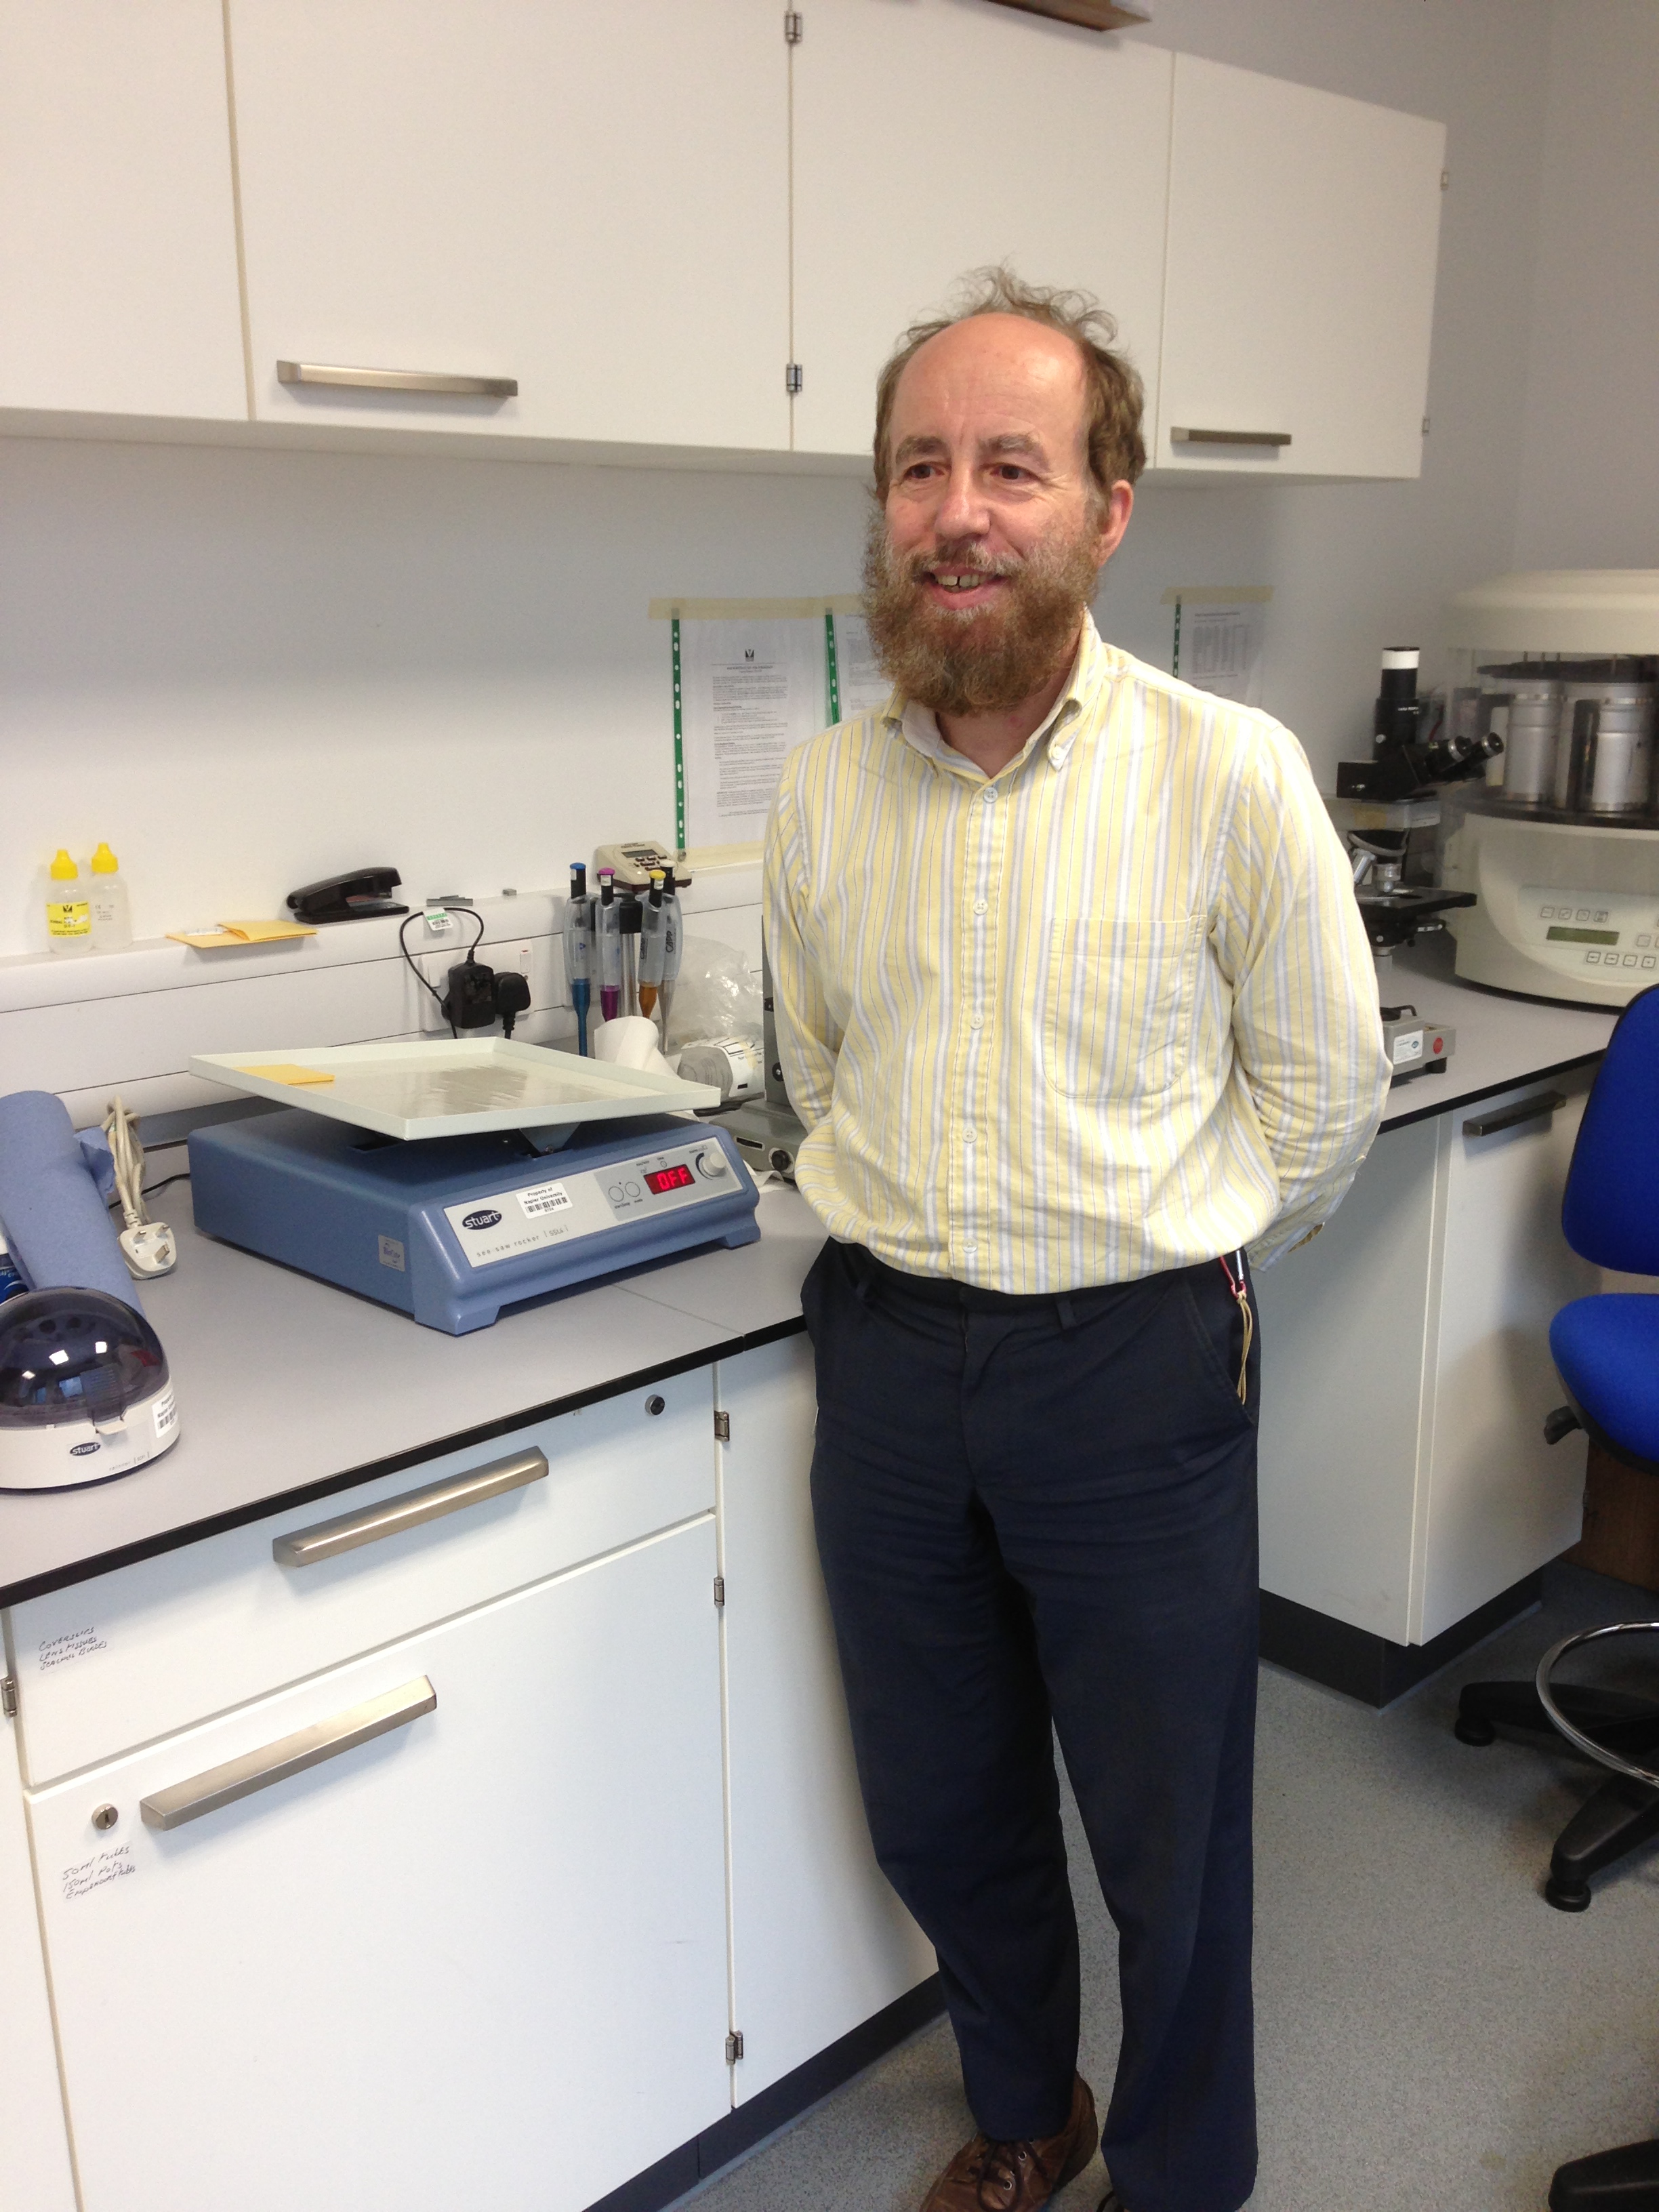 Chris Edmans Senior Technician in the Institute of Life Sciences at Edinburgh Napier University UK